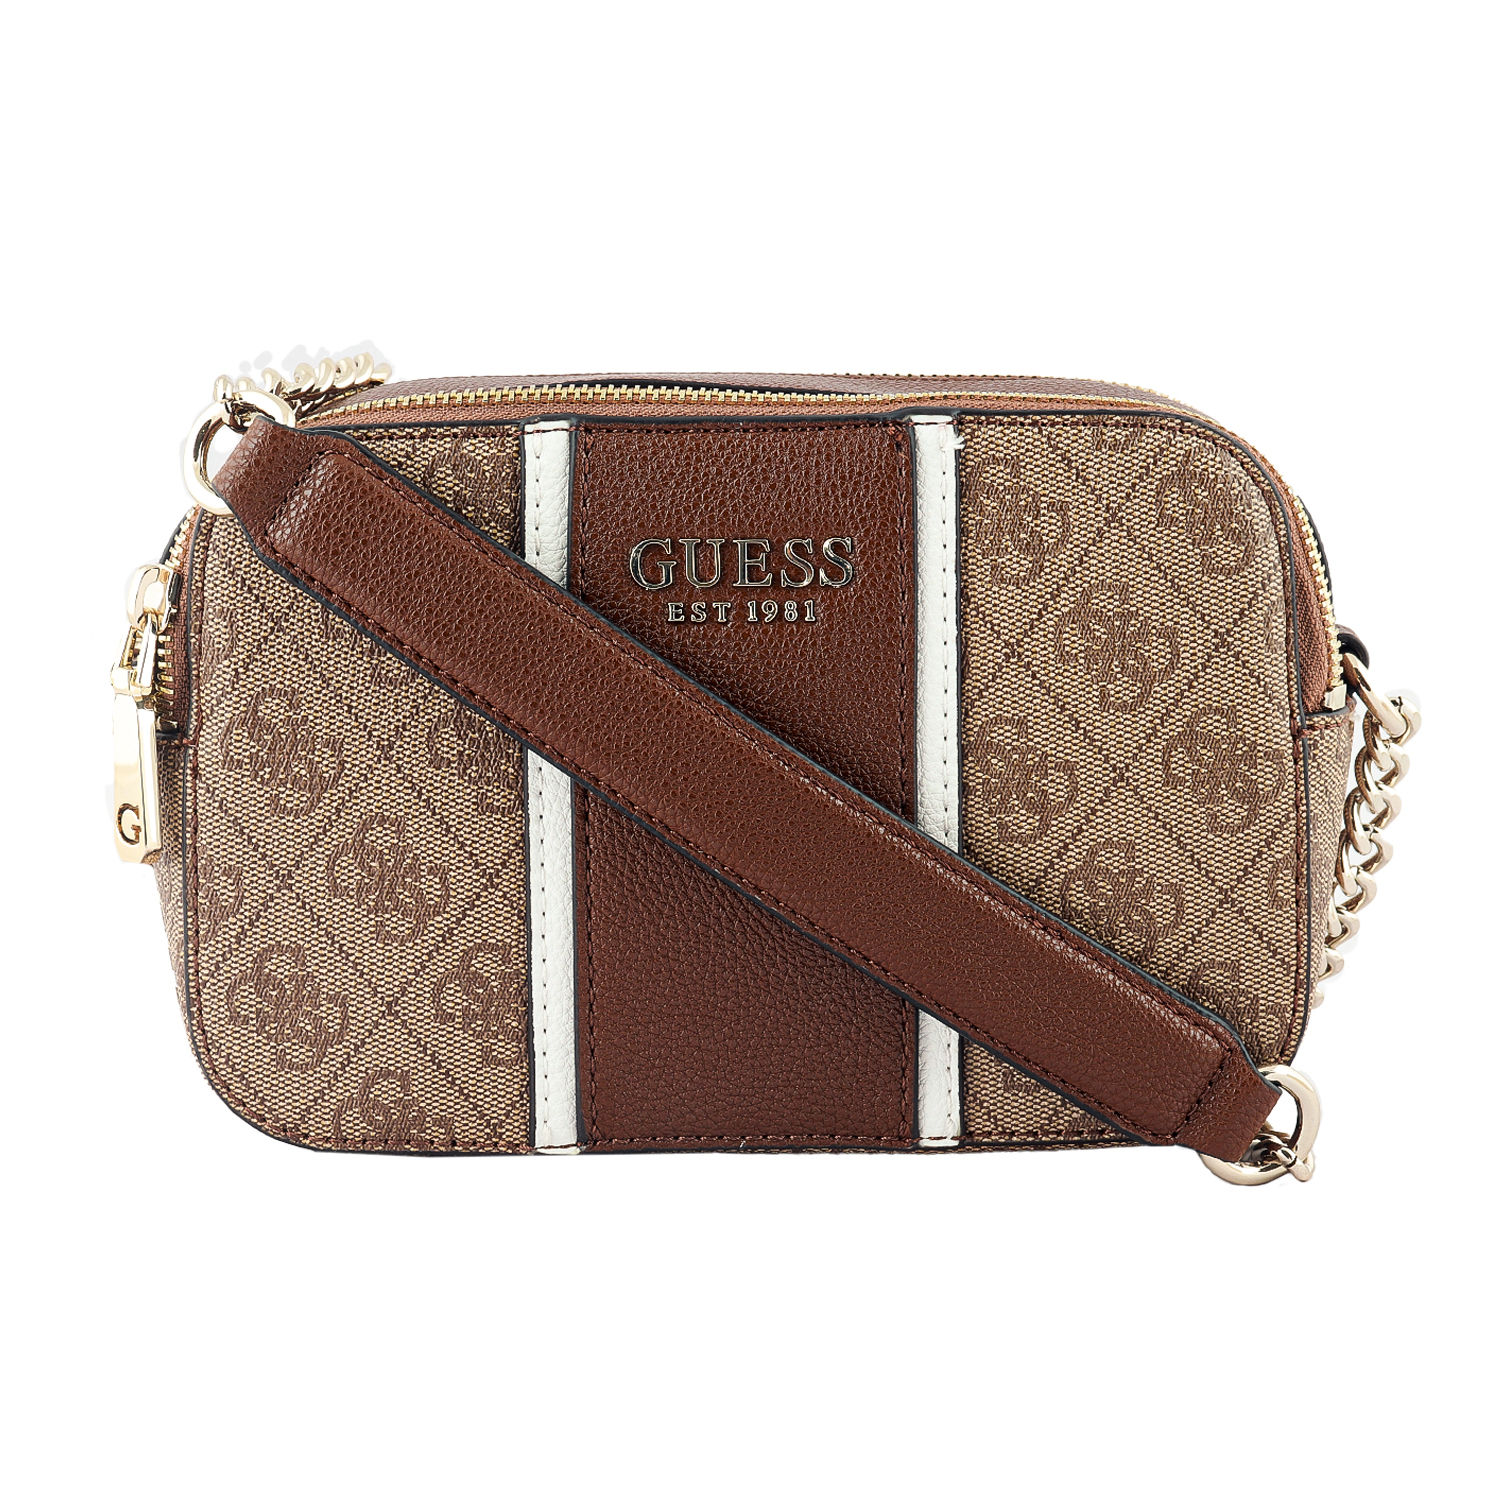 Guess Satchel Handbags | ShopStyle